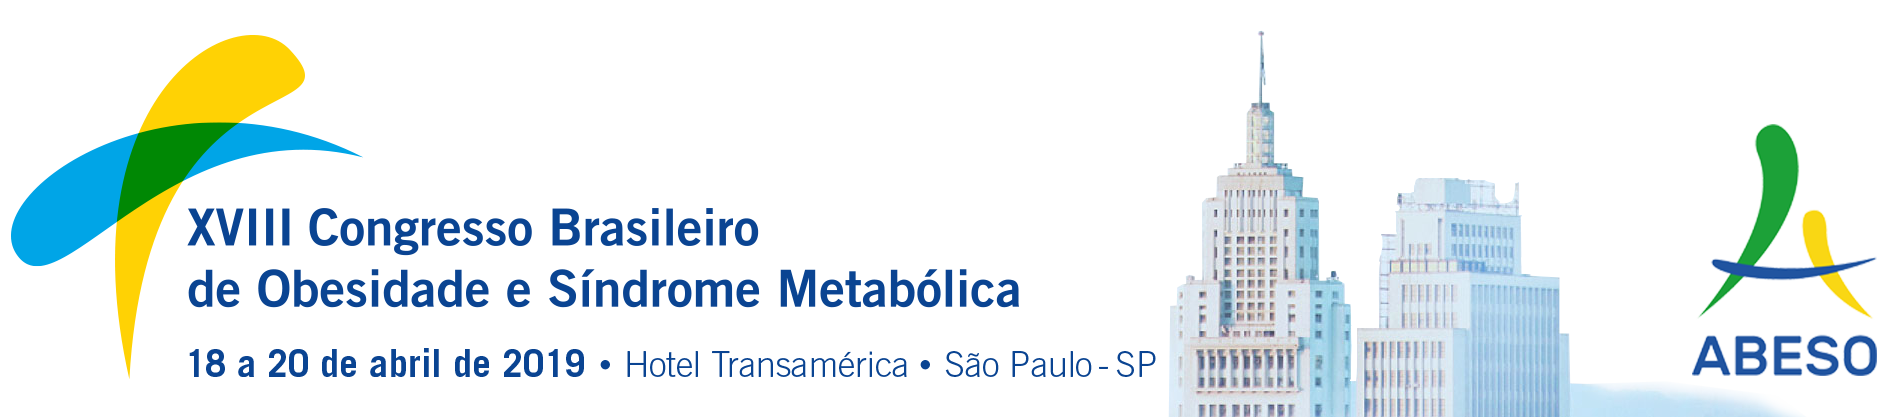 XVIII Congresso Brasileiro de Obesidade e Síndrome Metabólica